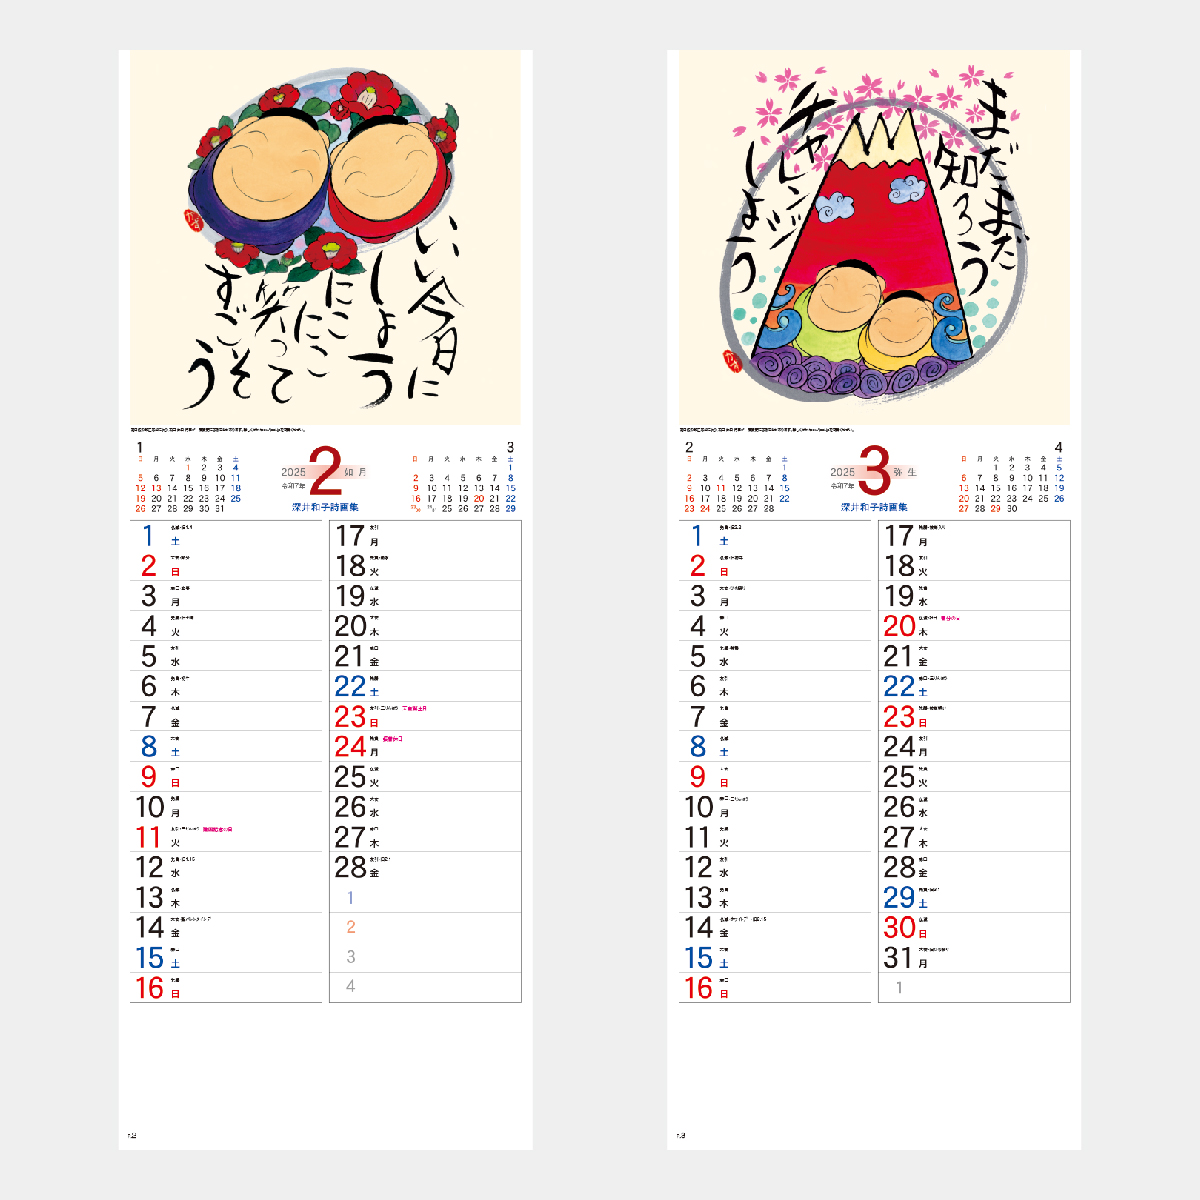 Nc 19 人間ばんざい 深井和子詩画集 22年版の名入れカレンダーを格安で販売 名入れカレンダー印刷 Com